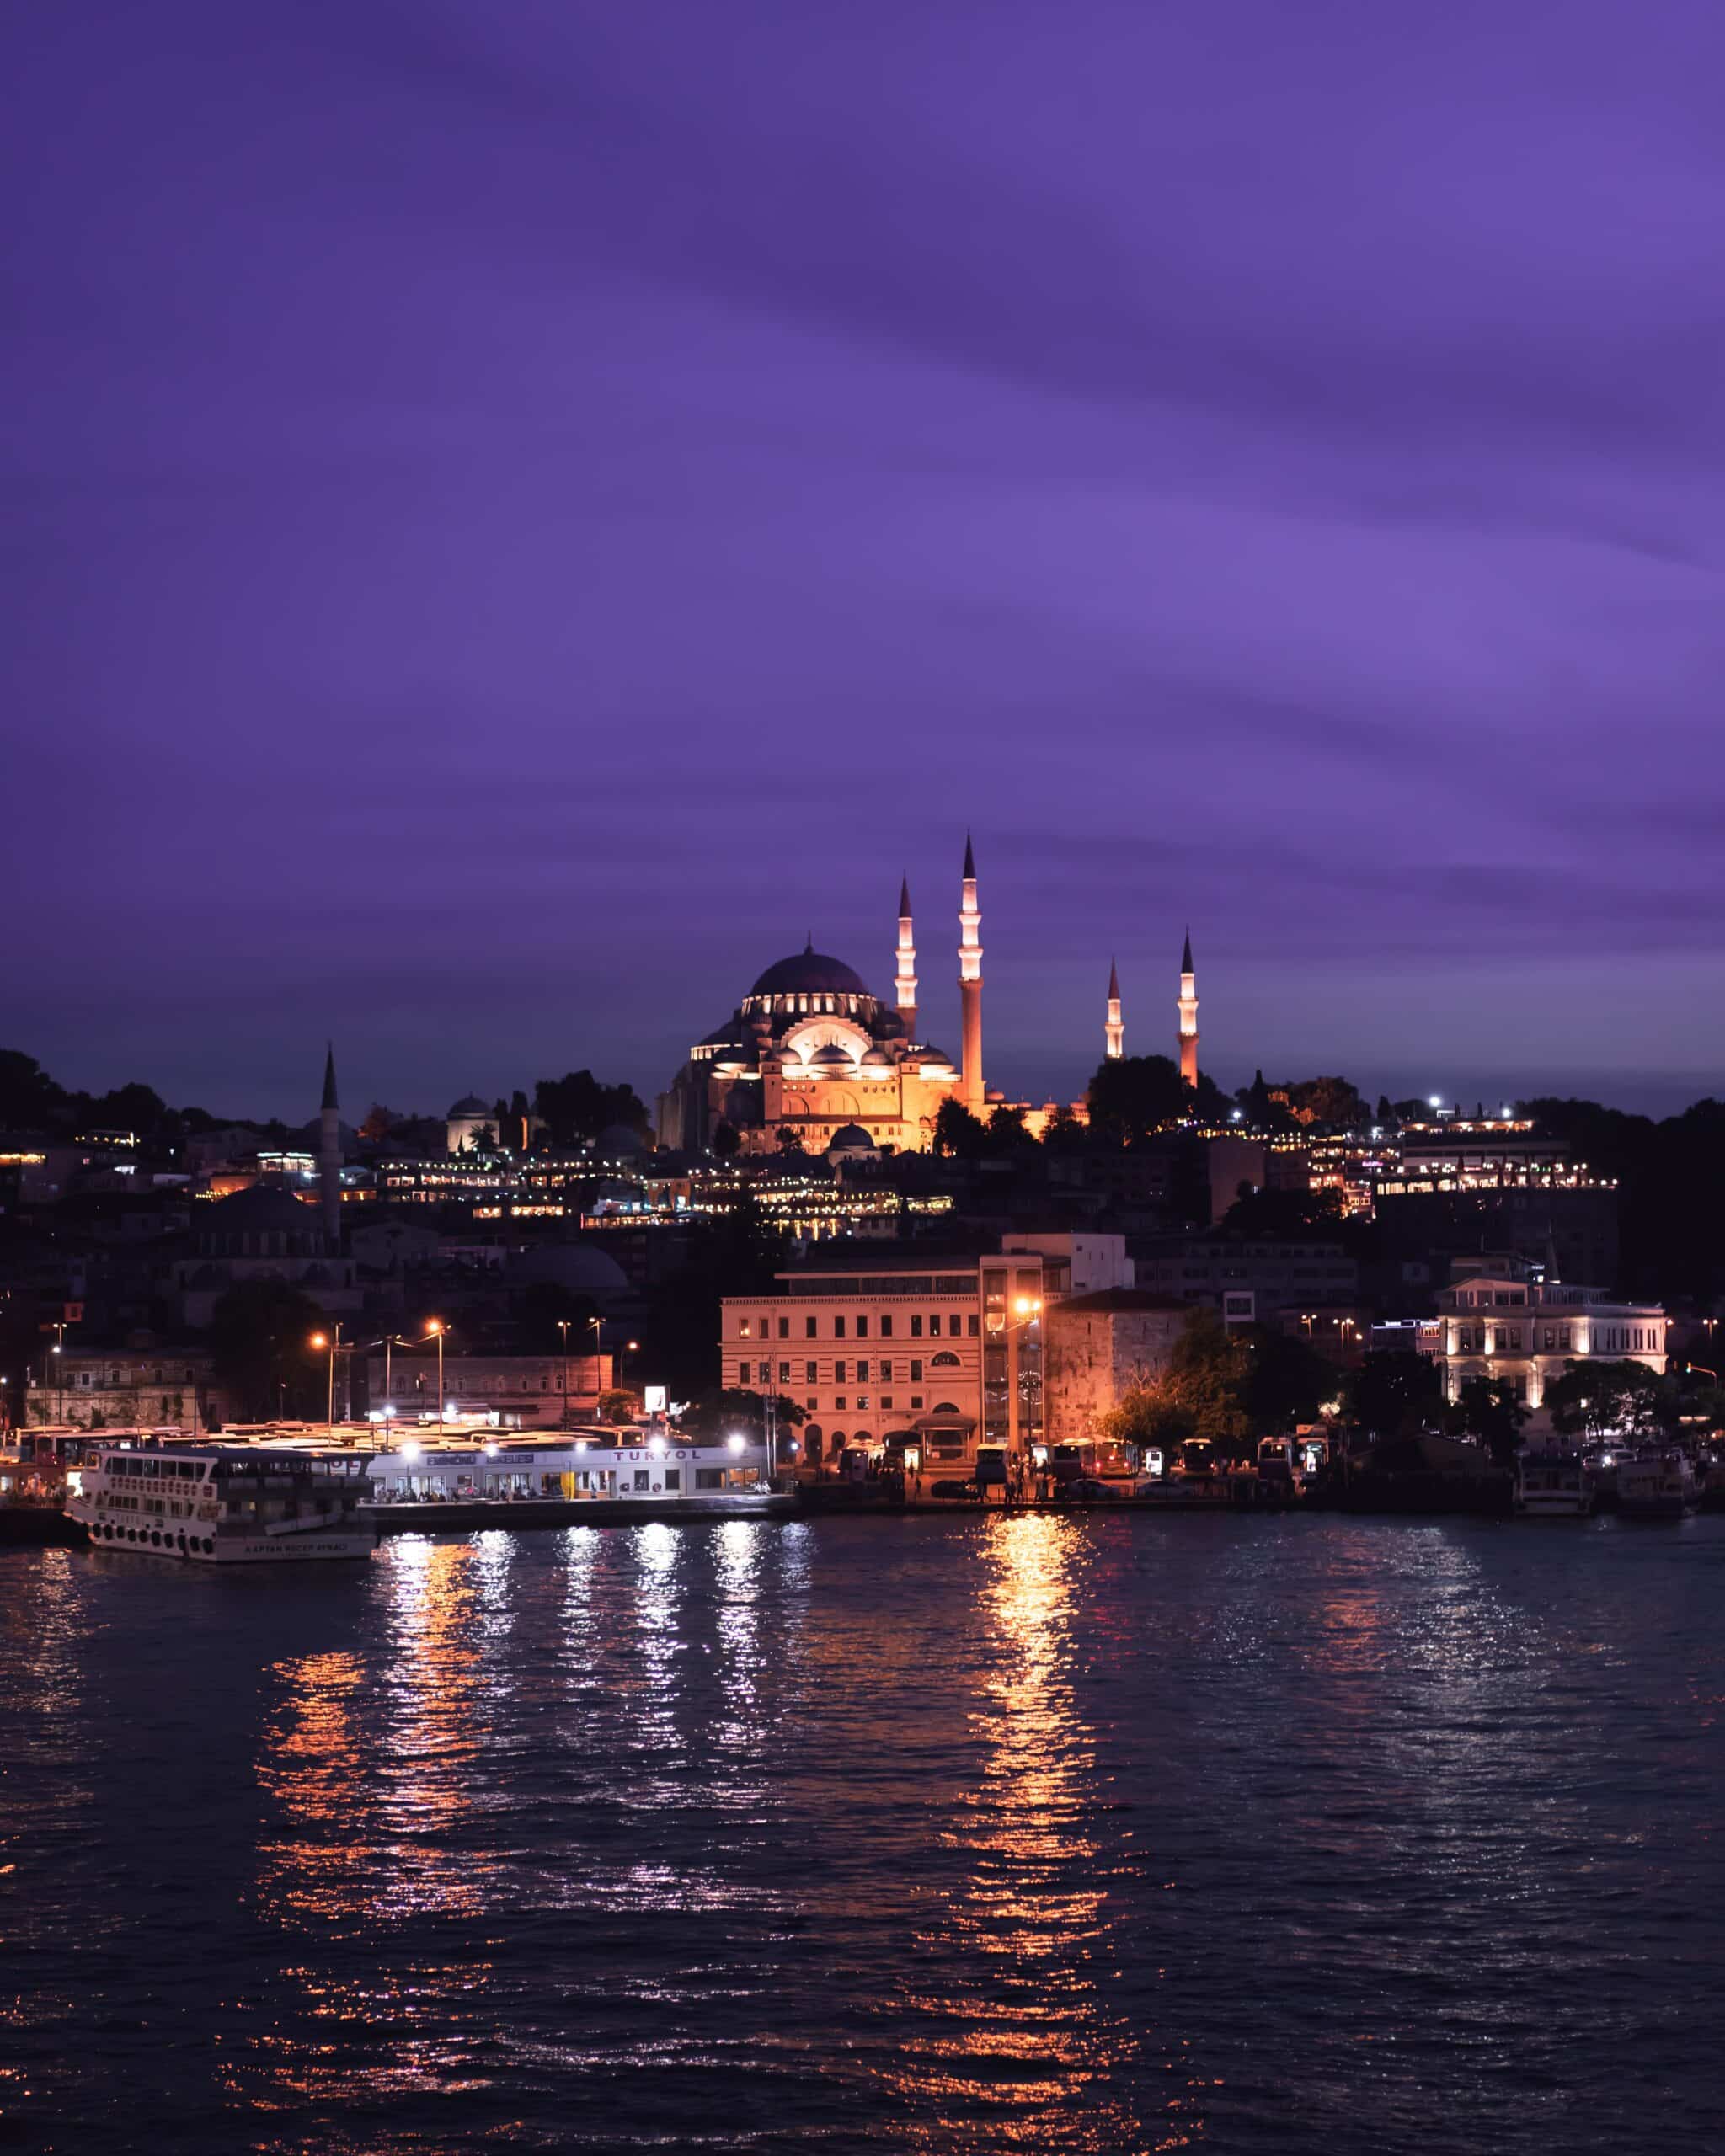 Istanbul-Blue-Mosque-Topkapi-Palace-Gallipoli-ANZAC-Ephesus-Cappadocia-Romania-Greece-Venice-europe-gems-cruise-venice-corfu-santorini-romania-bulgaria-turkey-black-sea